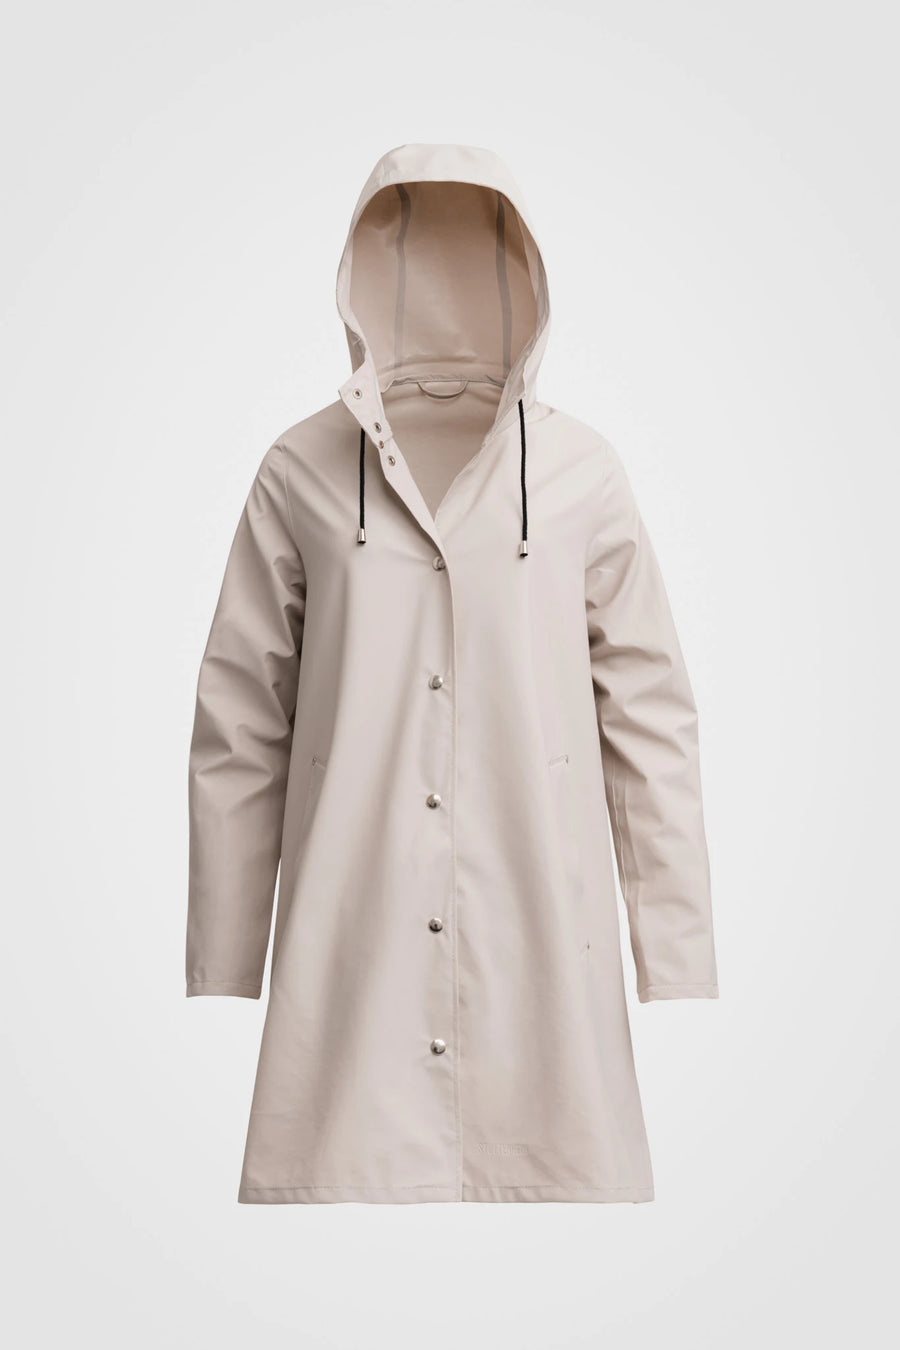 STUTTERHEIM Lightweight Moseback Raincoat in Color: 